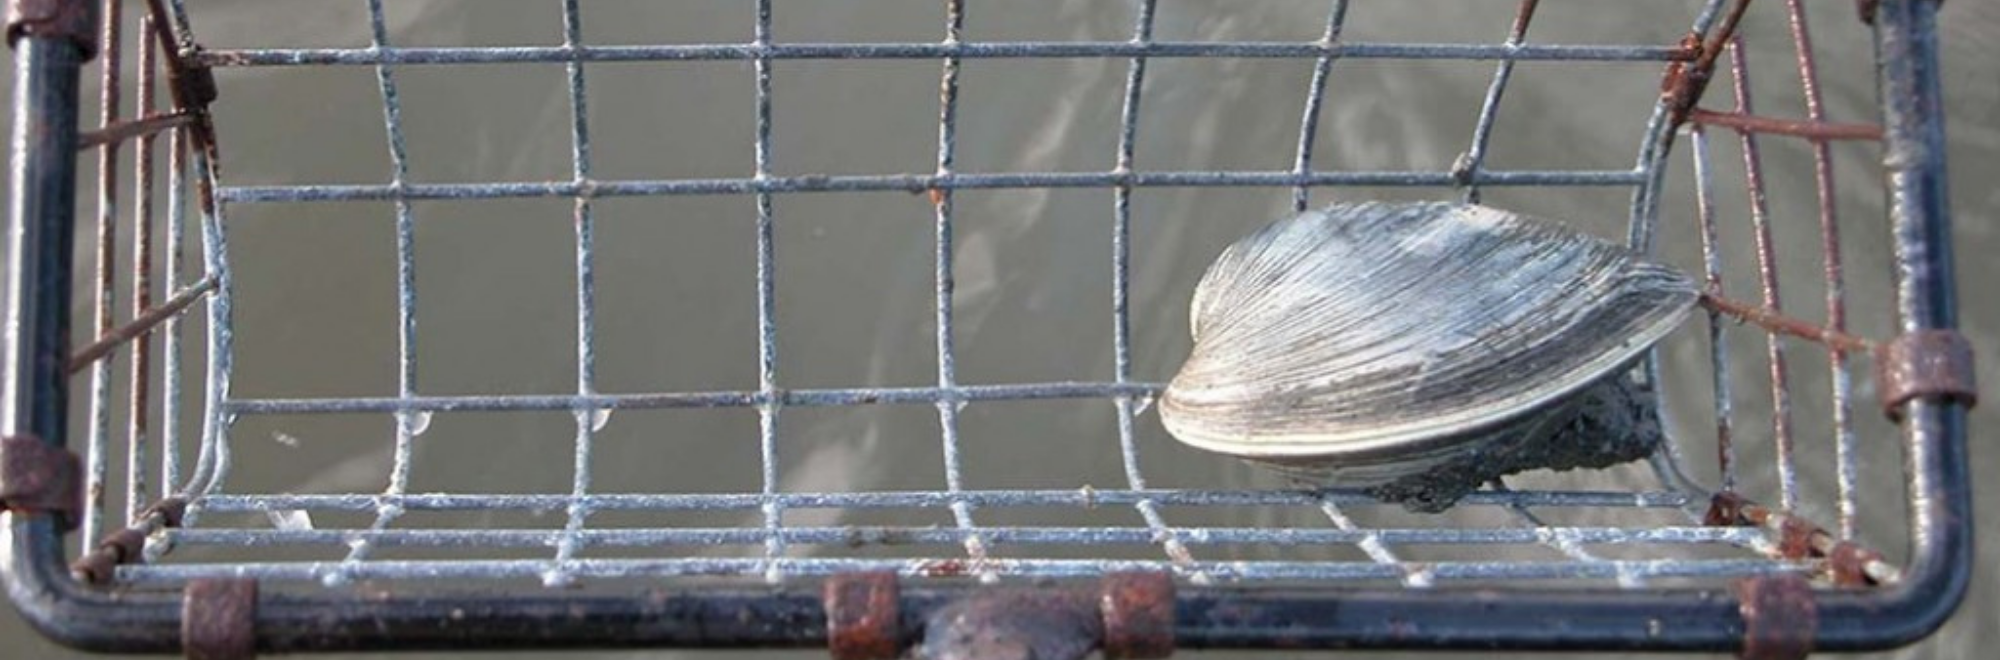 clam in rake above water